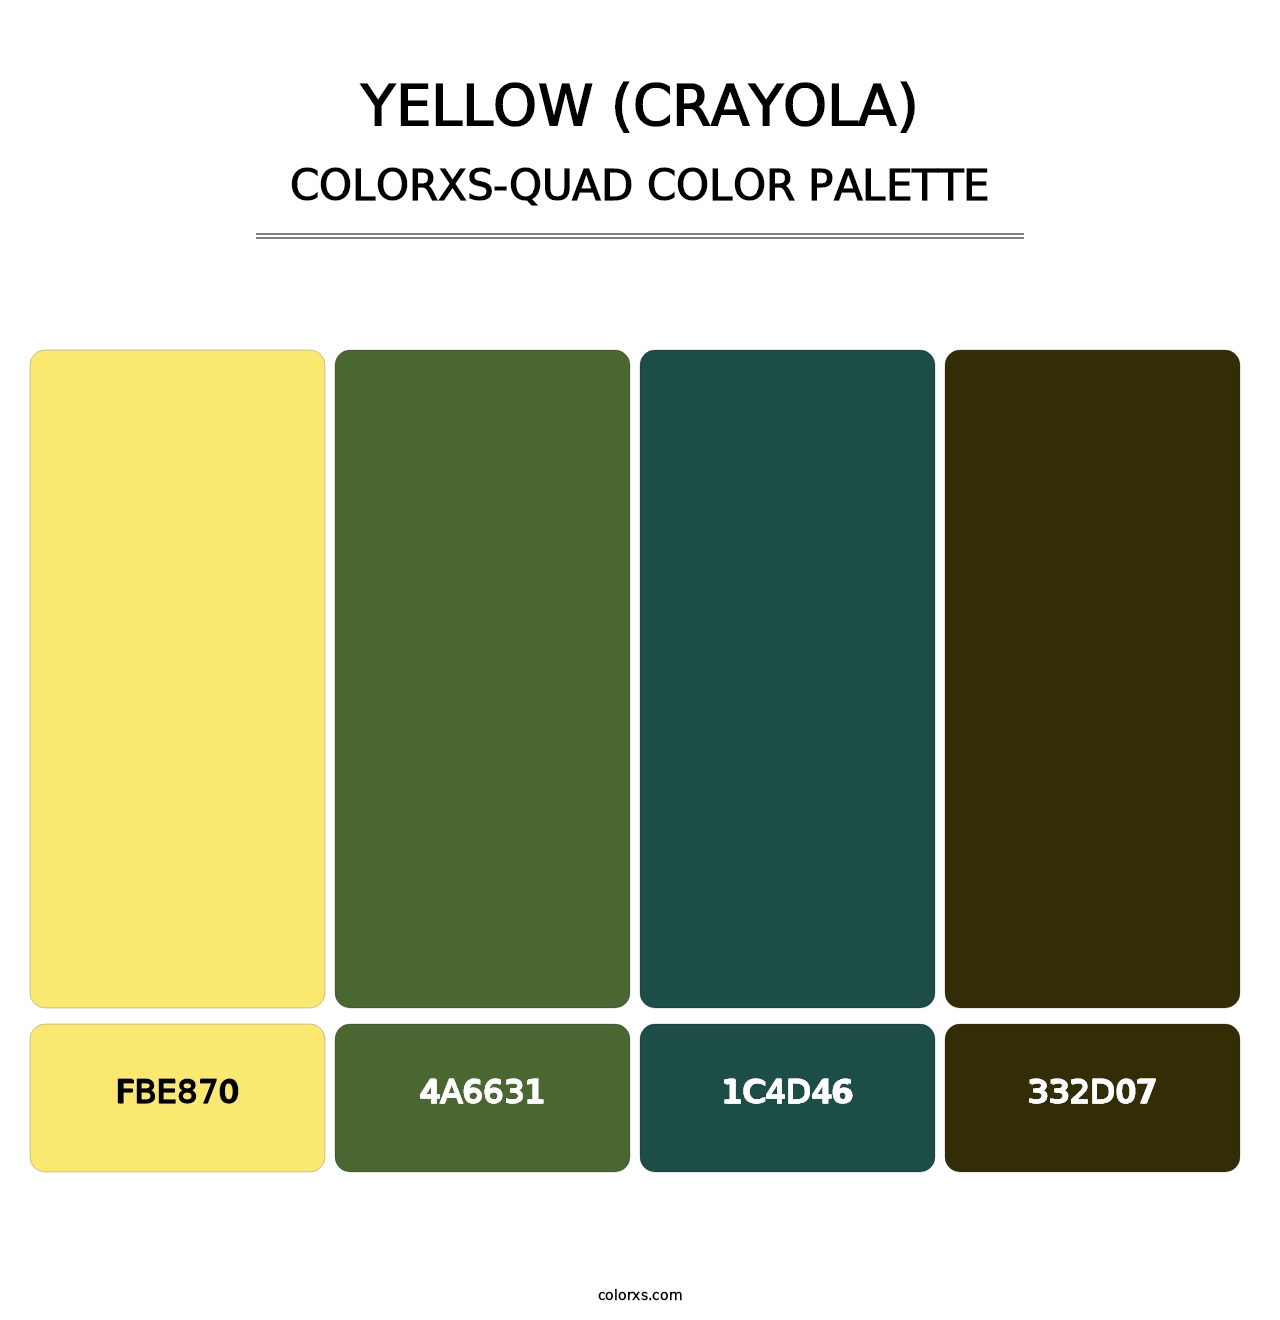 Yellow (Crayola) - Colorxs Quad Palette